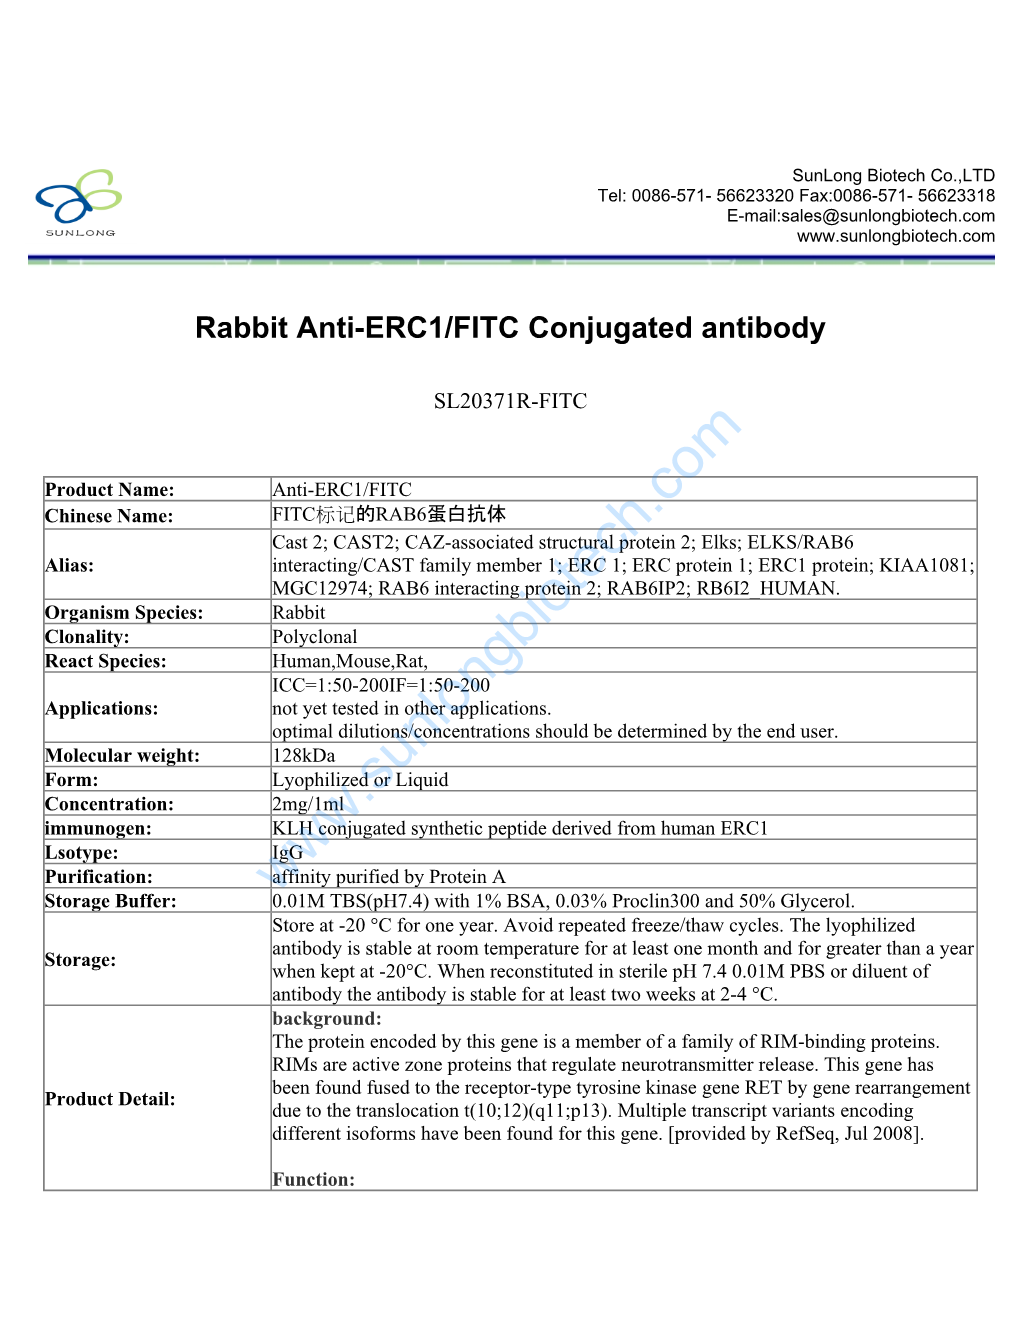 Rabbit Anti-ERC1/FITC Conjugated Antibody